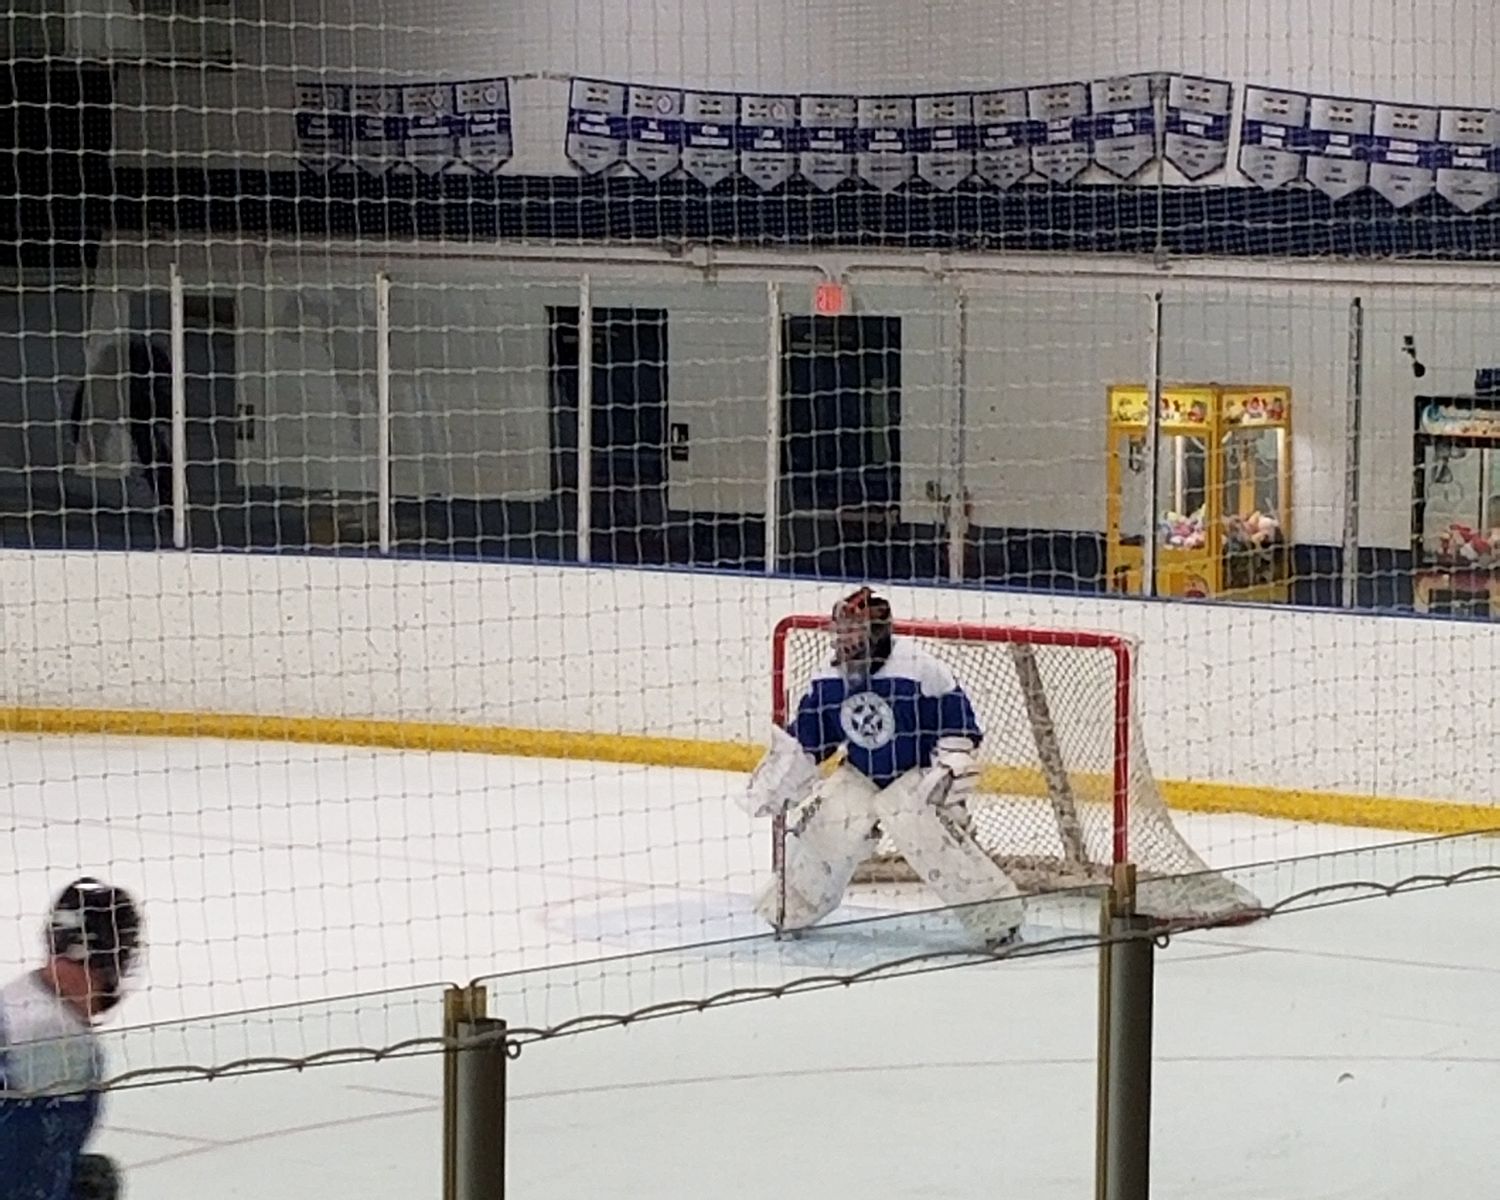 Me tending the net as a hockey goalie